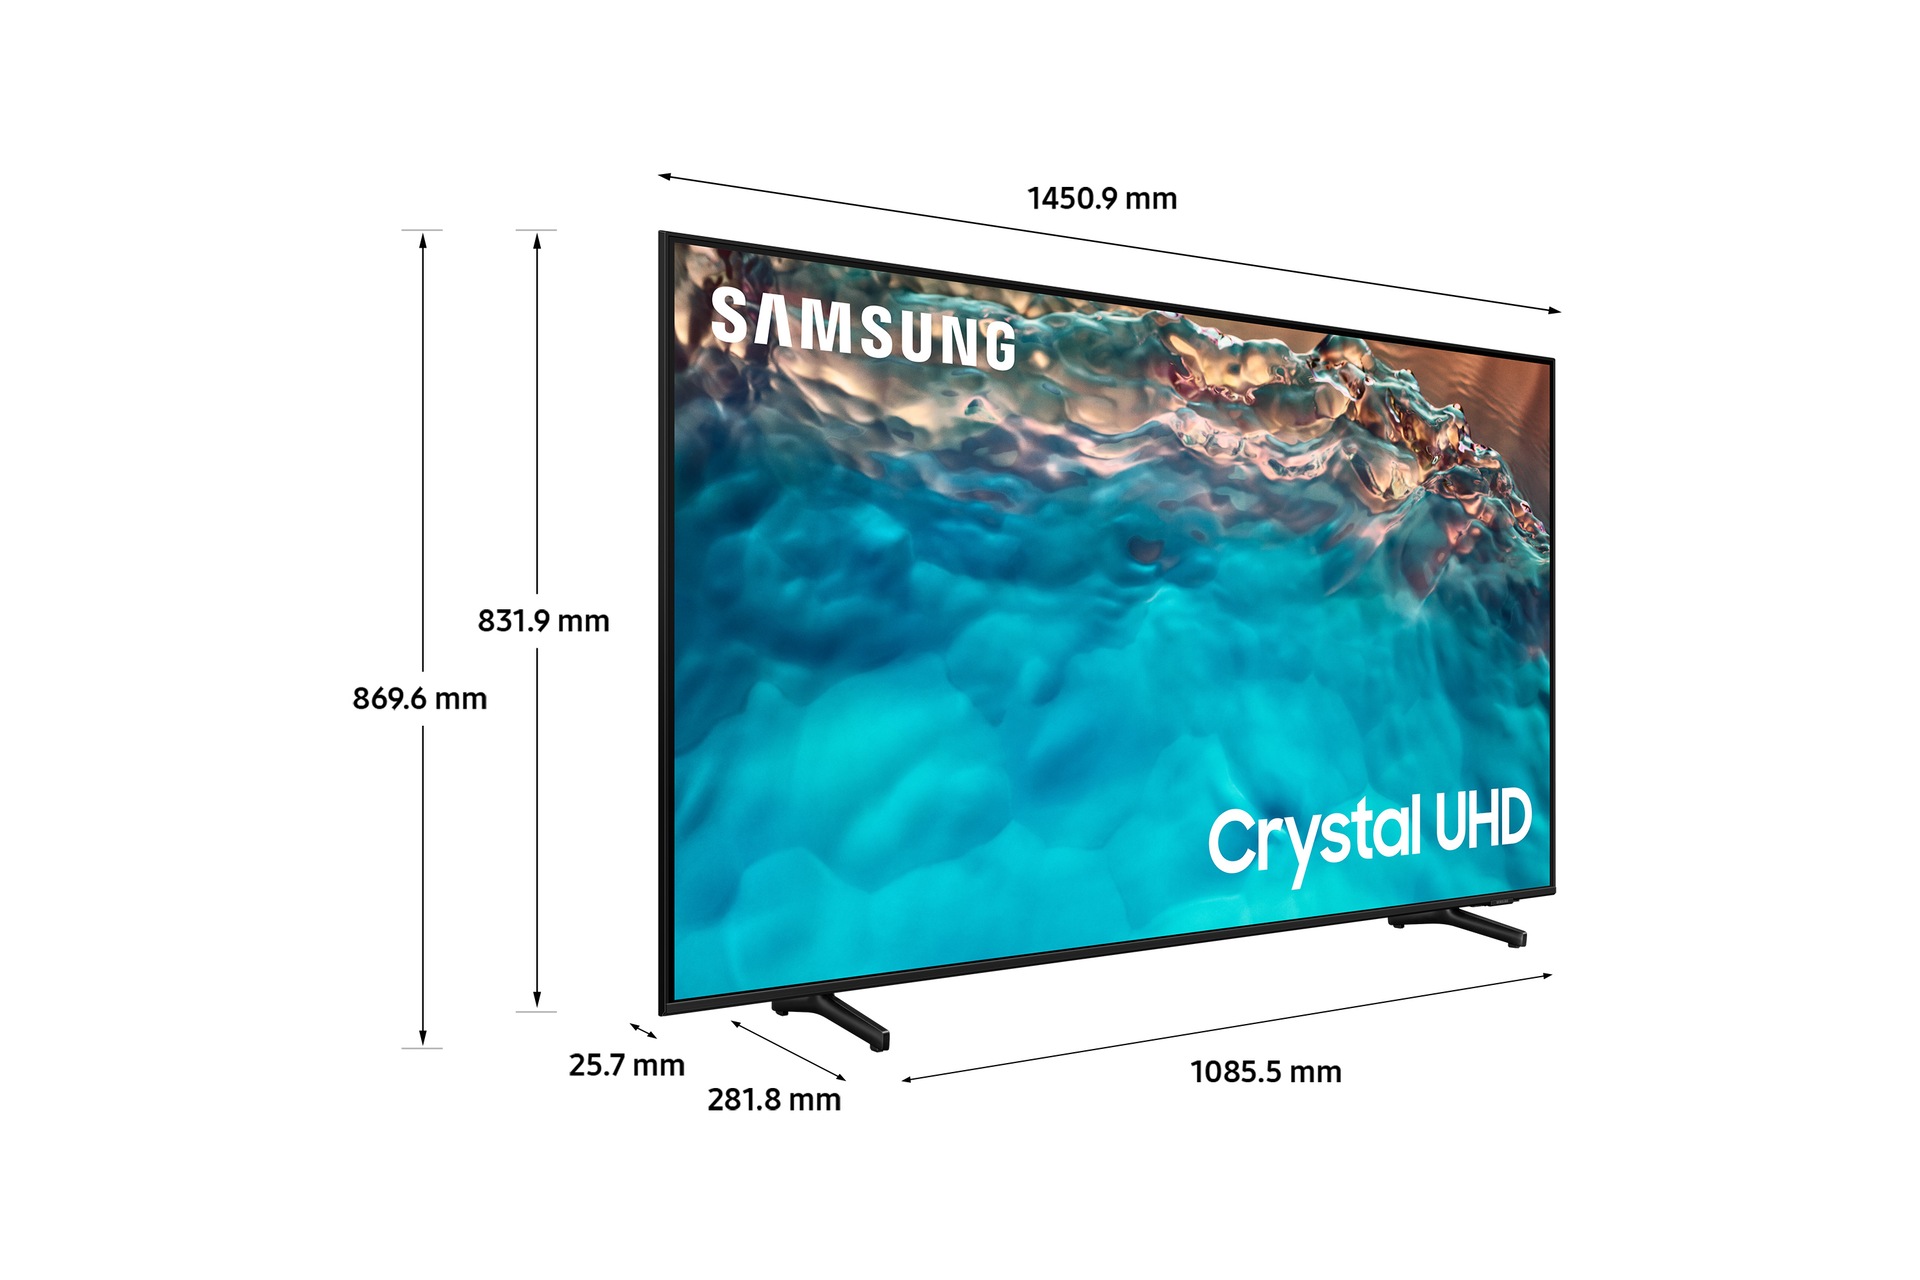 Samsung Crystal 4K UHD TV 2022 Overview